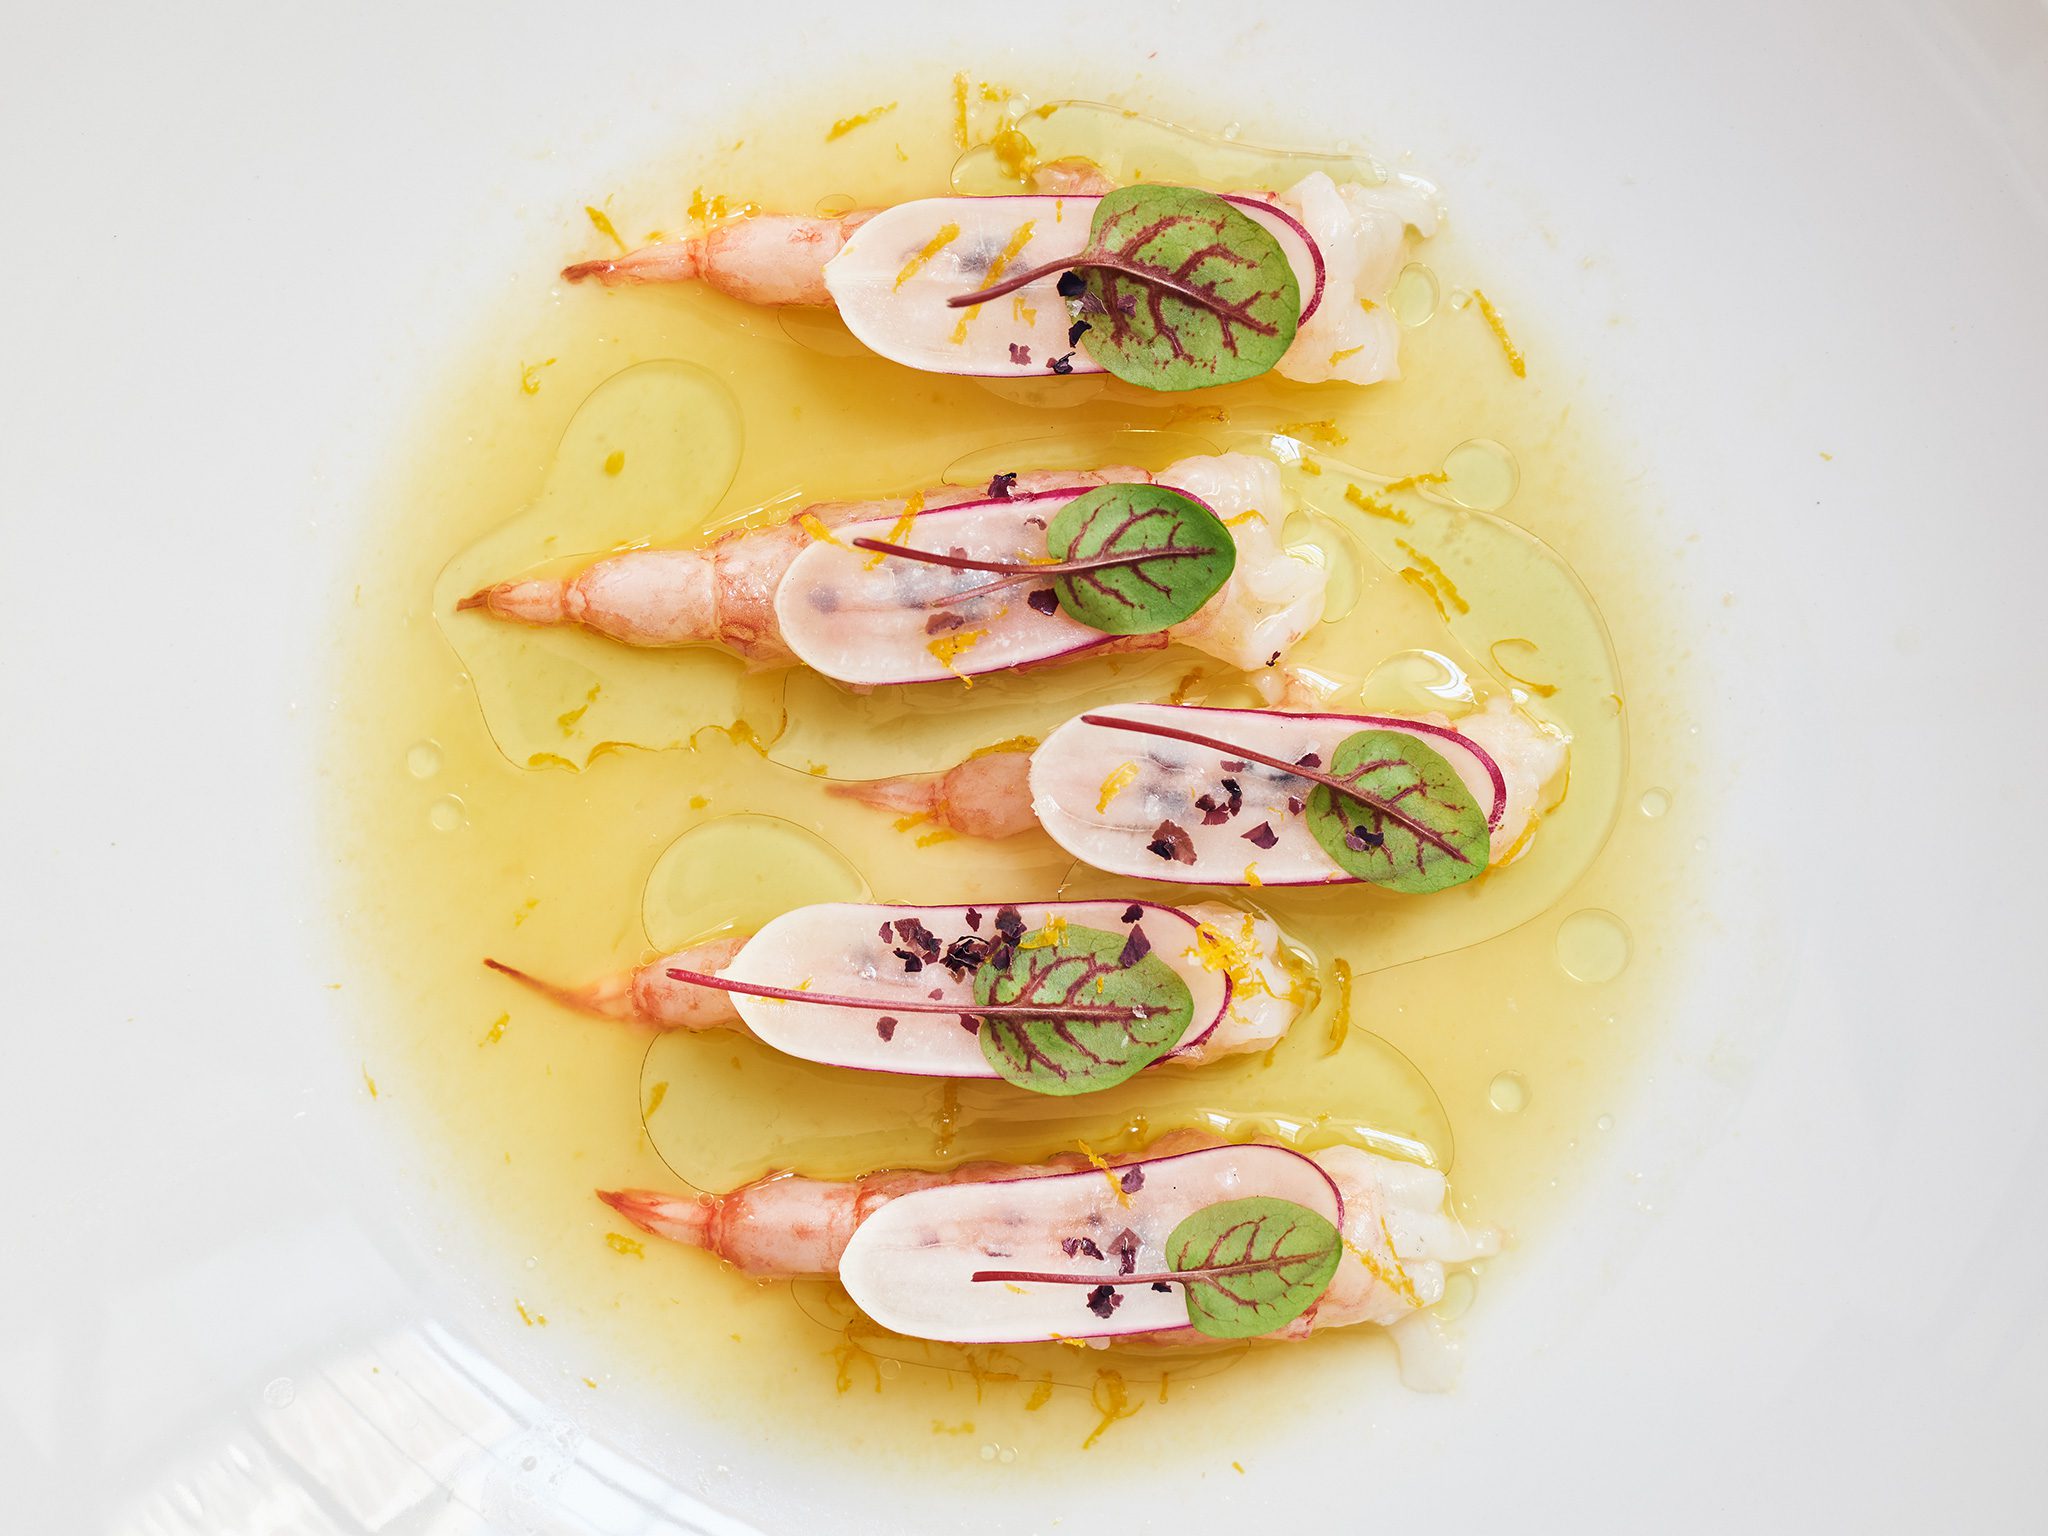 Spot prawn crudo with calamansi vinegar, olive oil and radish